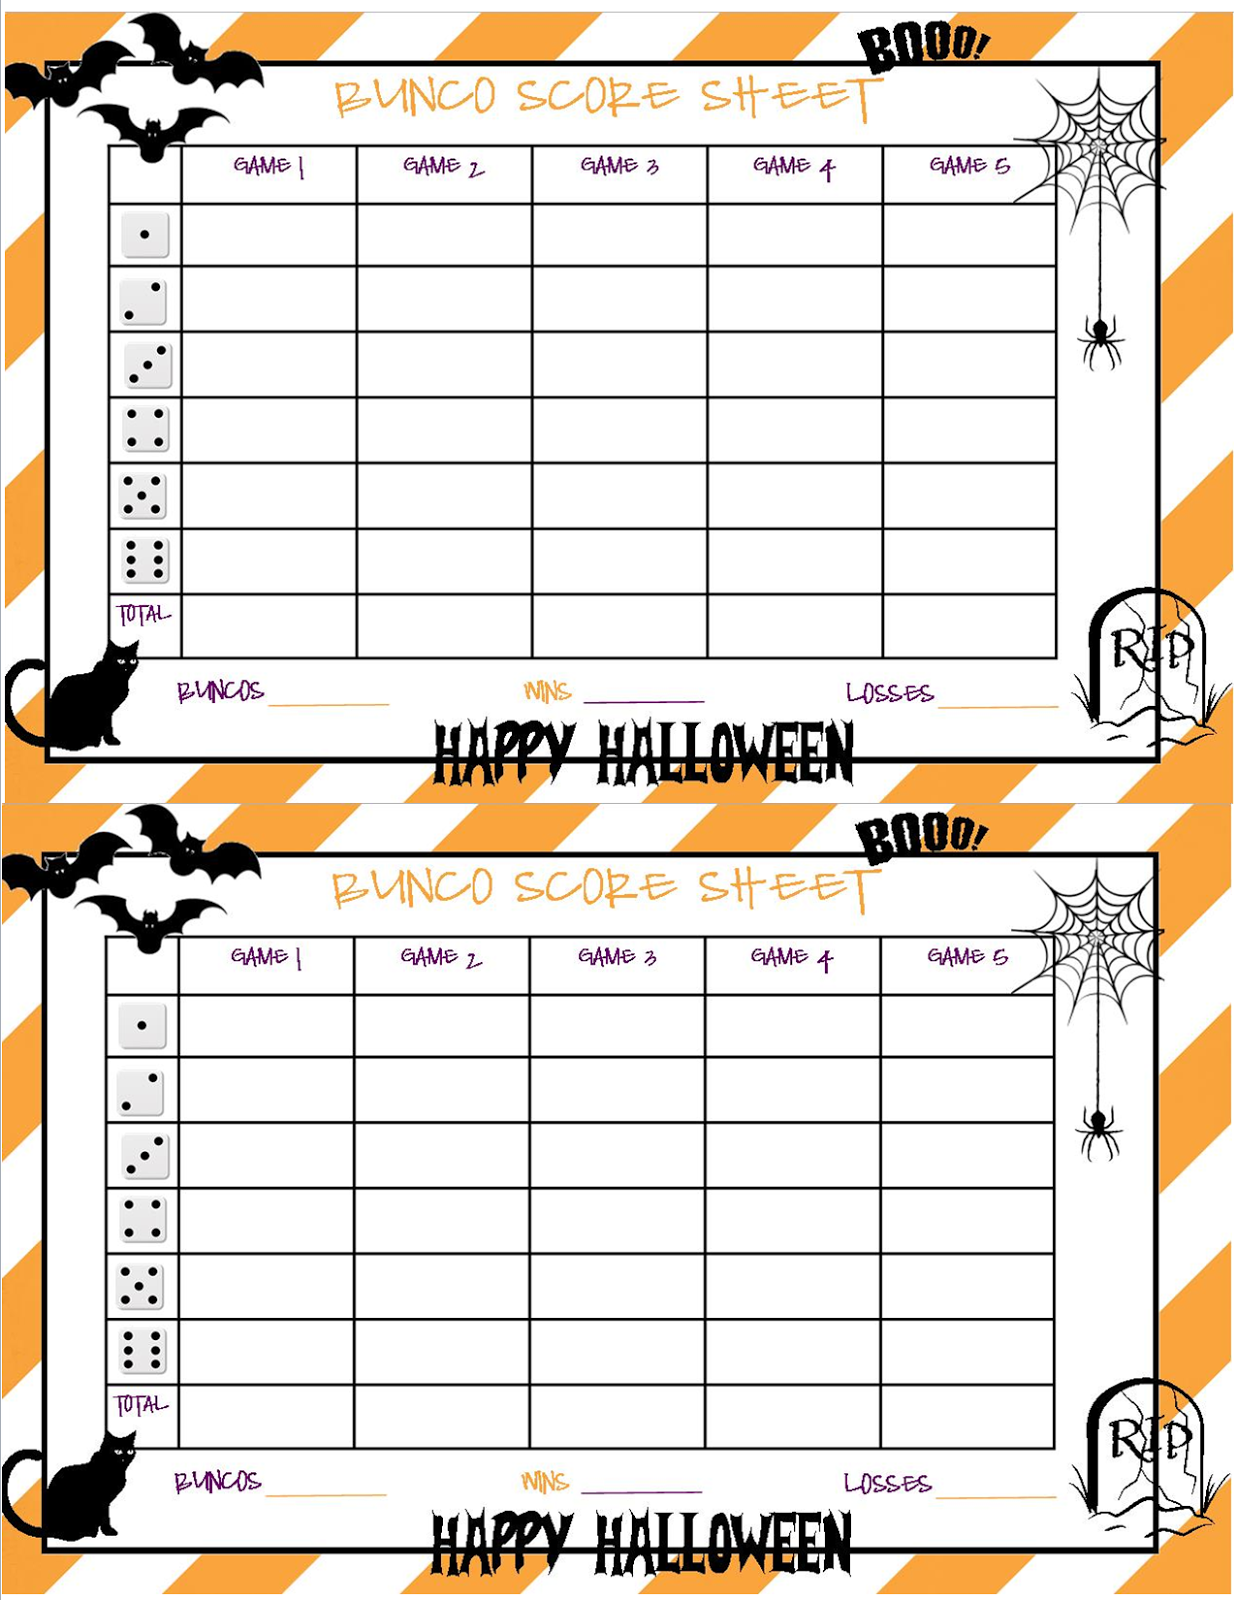 Recipes From Stephanie: Halloween Bunco Sheet | Halloween Bunco intended for Free Printable Halloween Bunco Score Sheets